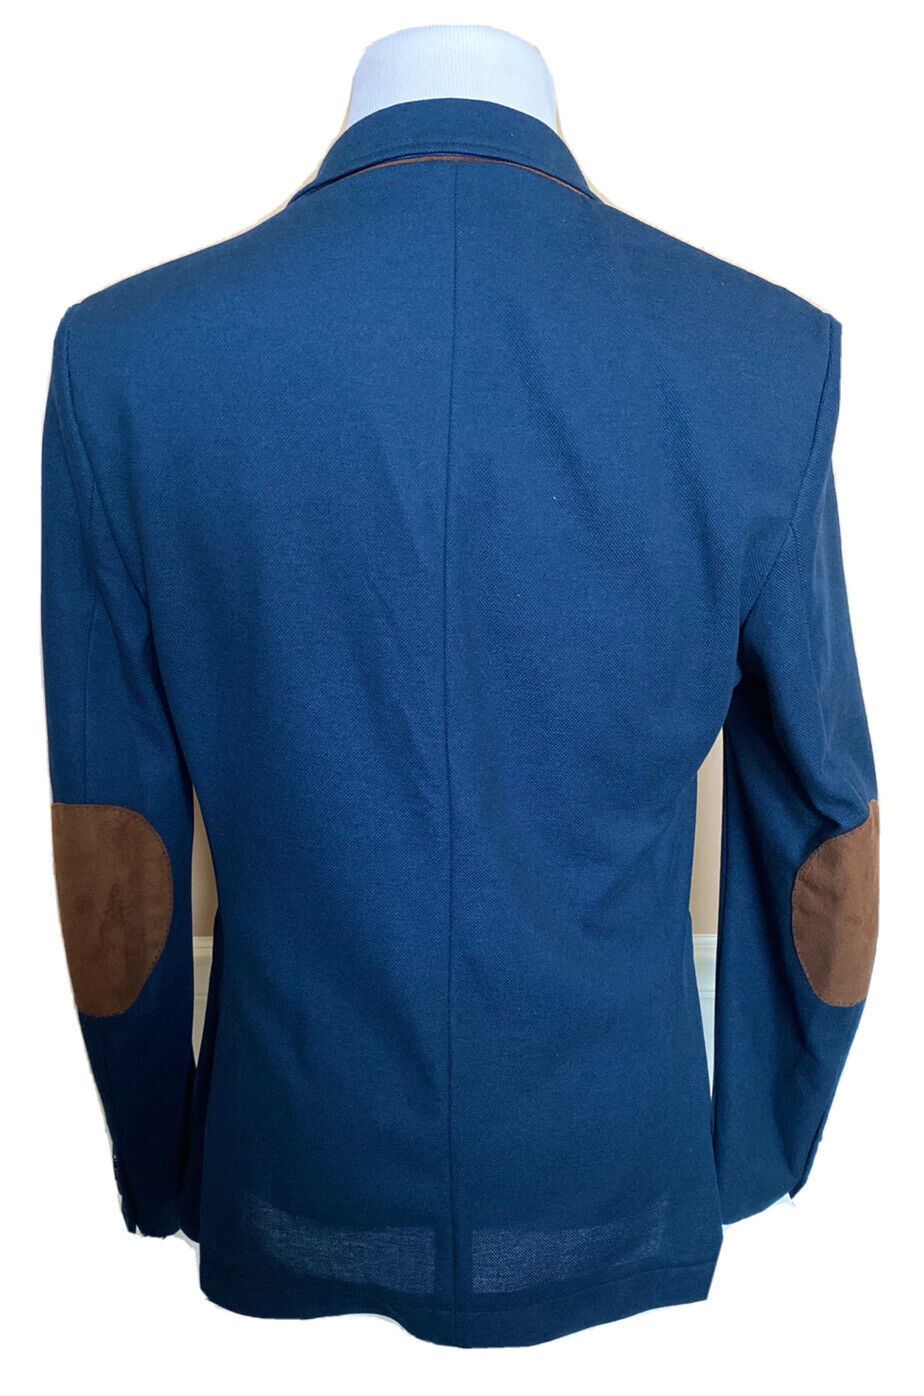 ZARA MAN 100% Polyester Sport Coat Jacket Size 40 US (50 Euro)